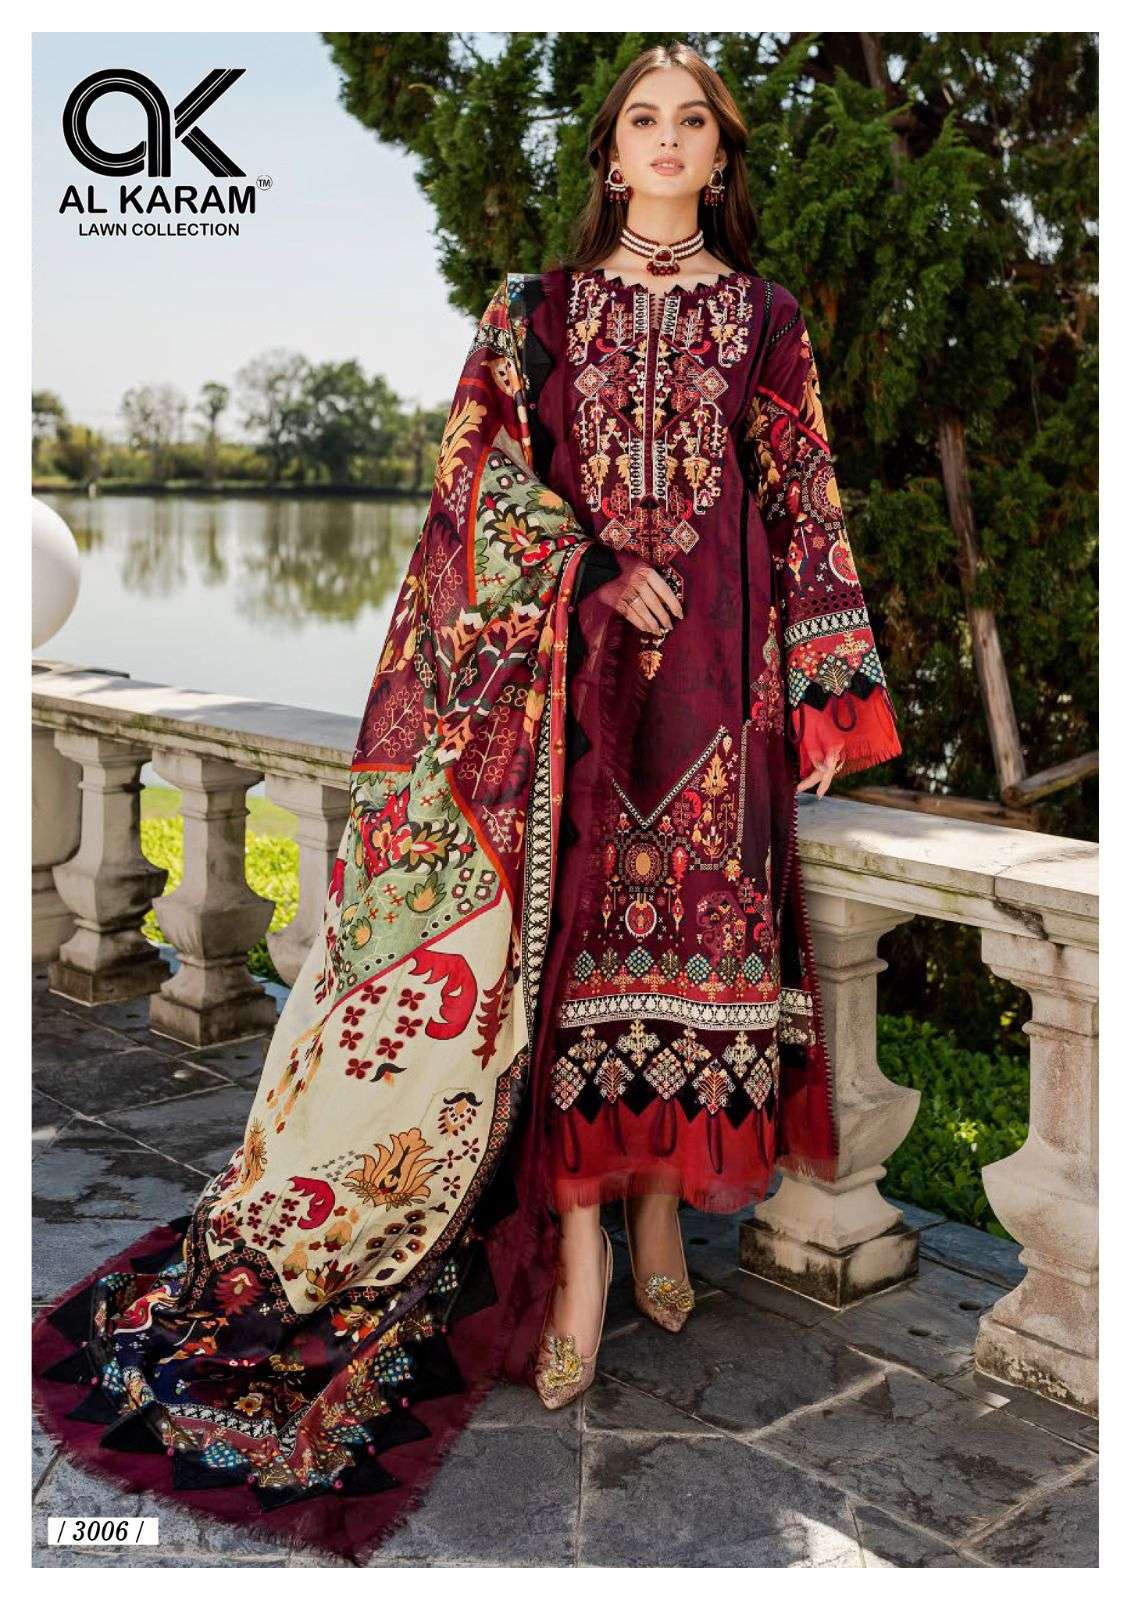 Al Karam Queen S Court Vol-3 – Dress Material Wholesale catalog